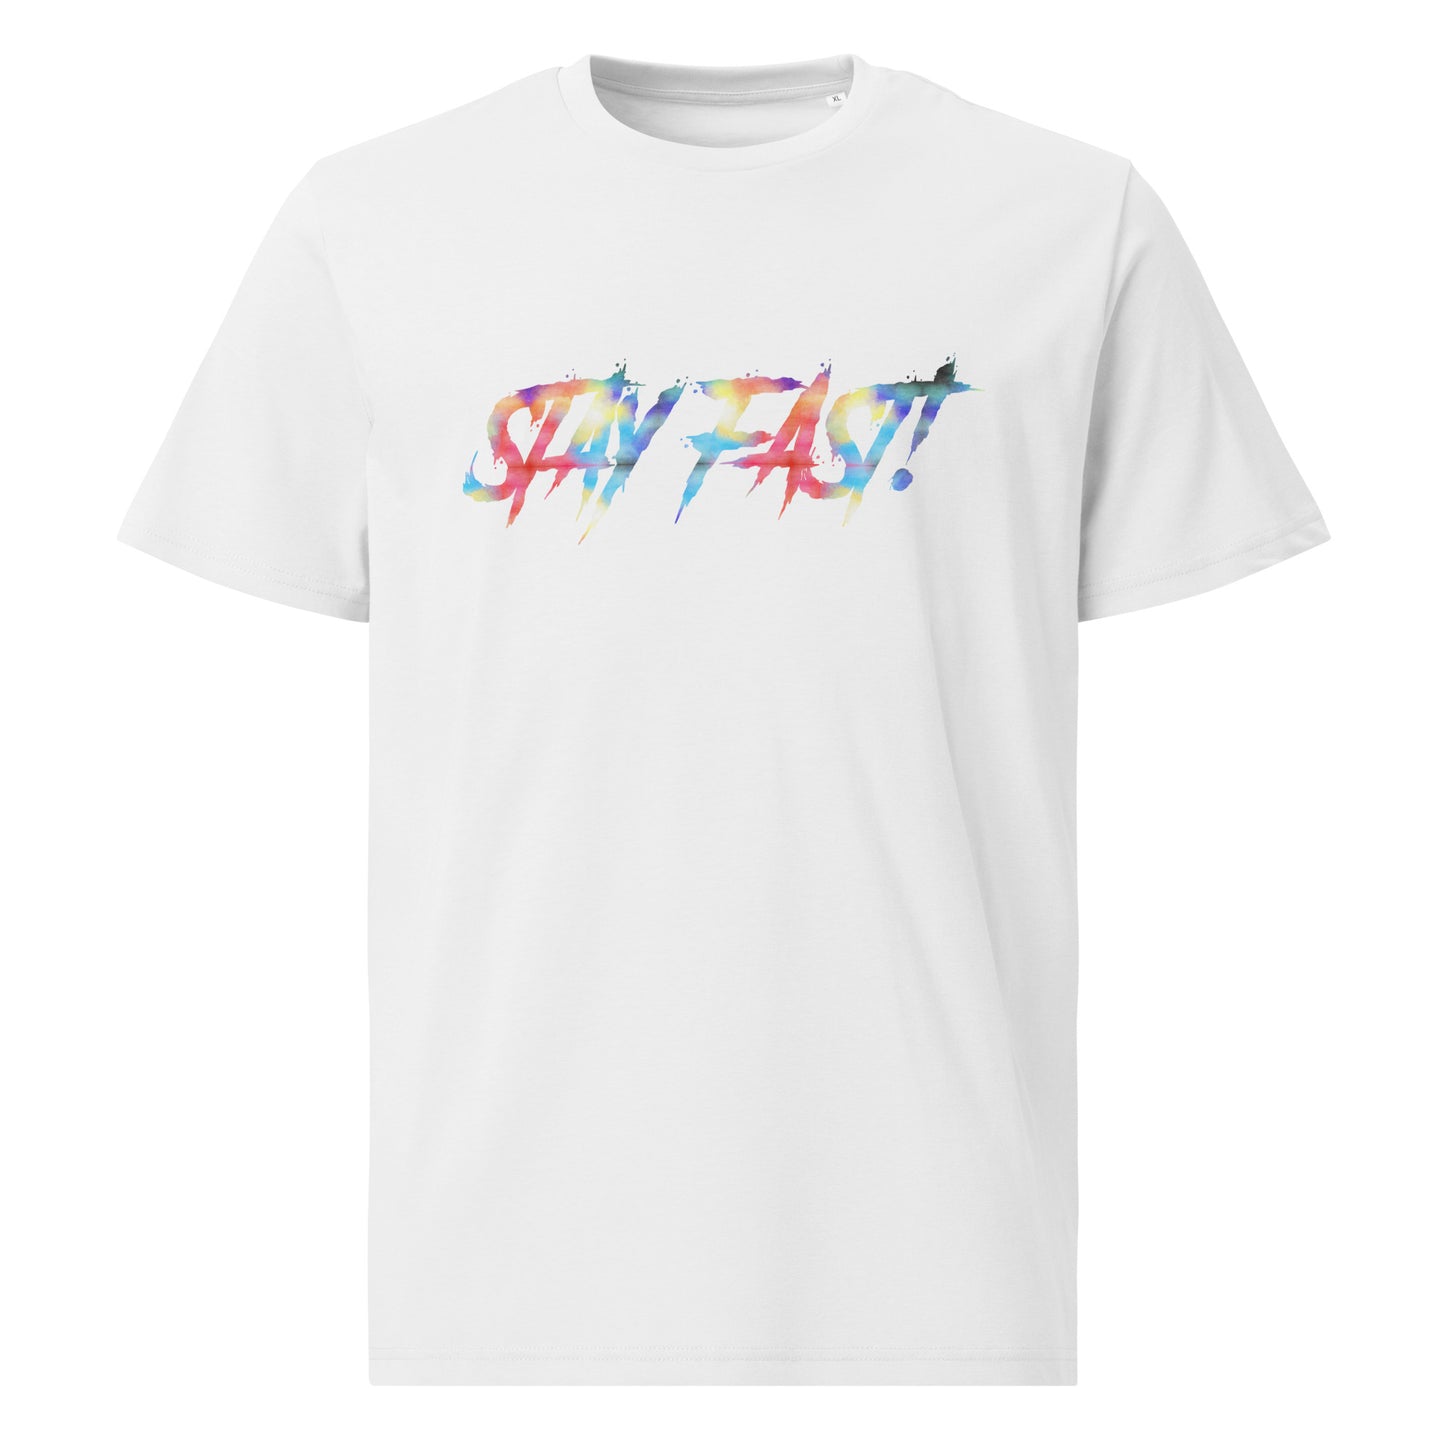 FAST-CLUB Shirt "Stay Fast!"